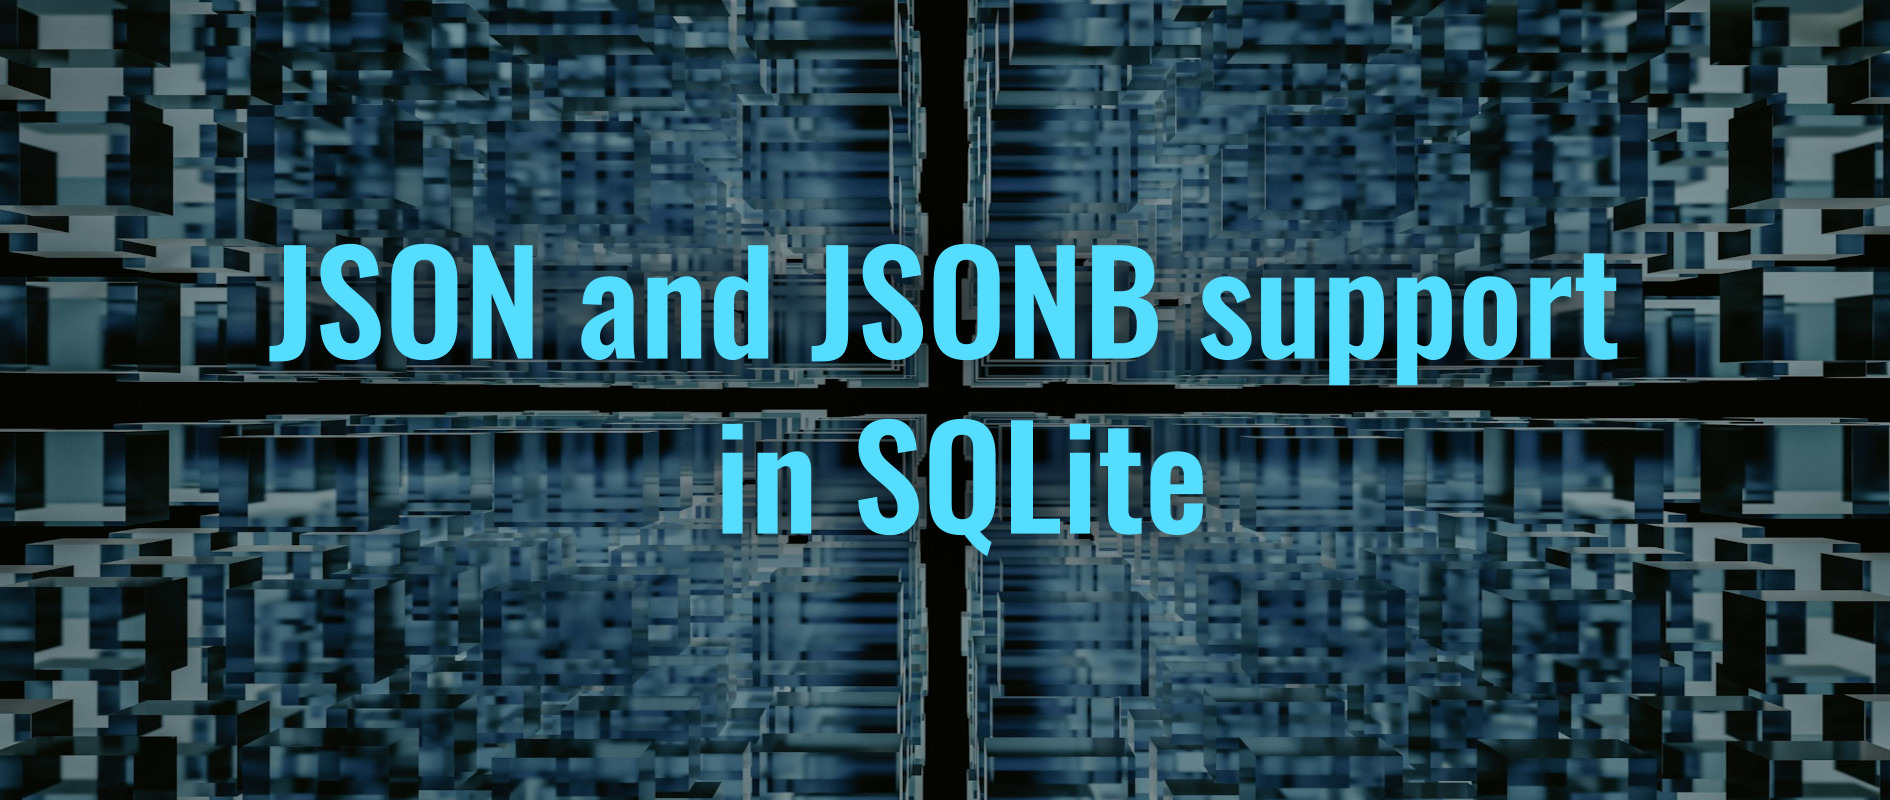 JSON and JSONB support in SQLite - Fedora Magazine